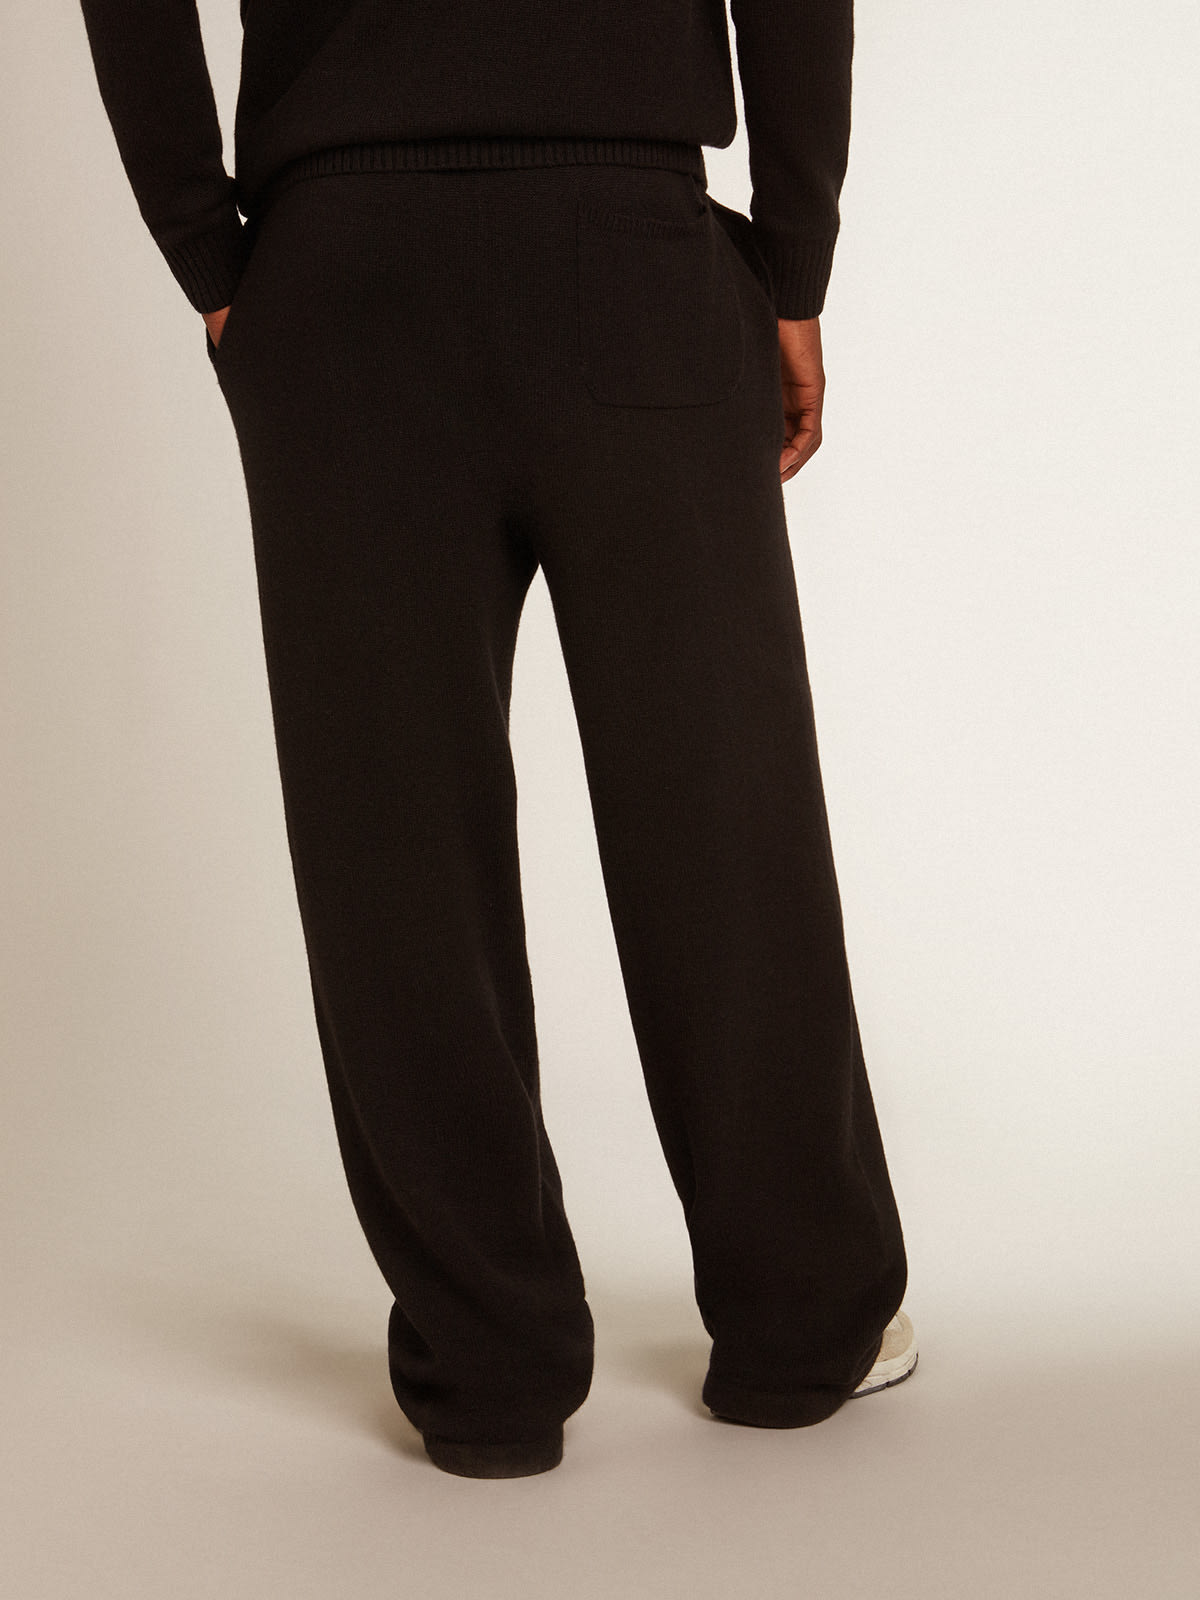 Golden Goose - Pantalón jogger de hombre en mezcla de cachemira de color negro in 